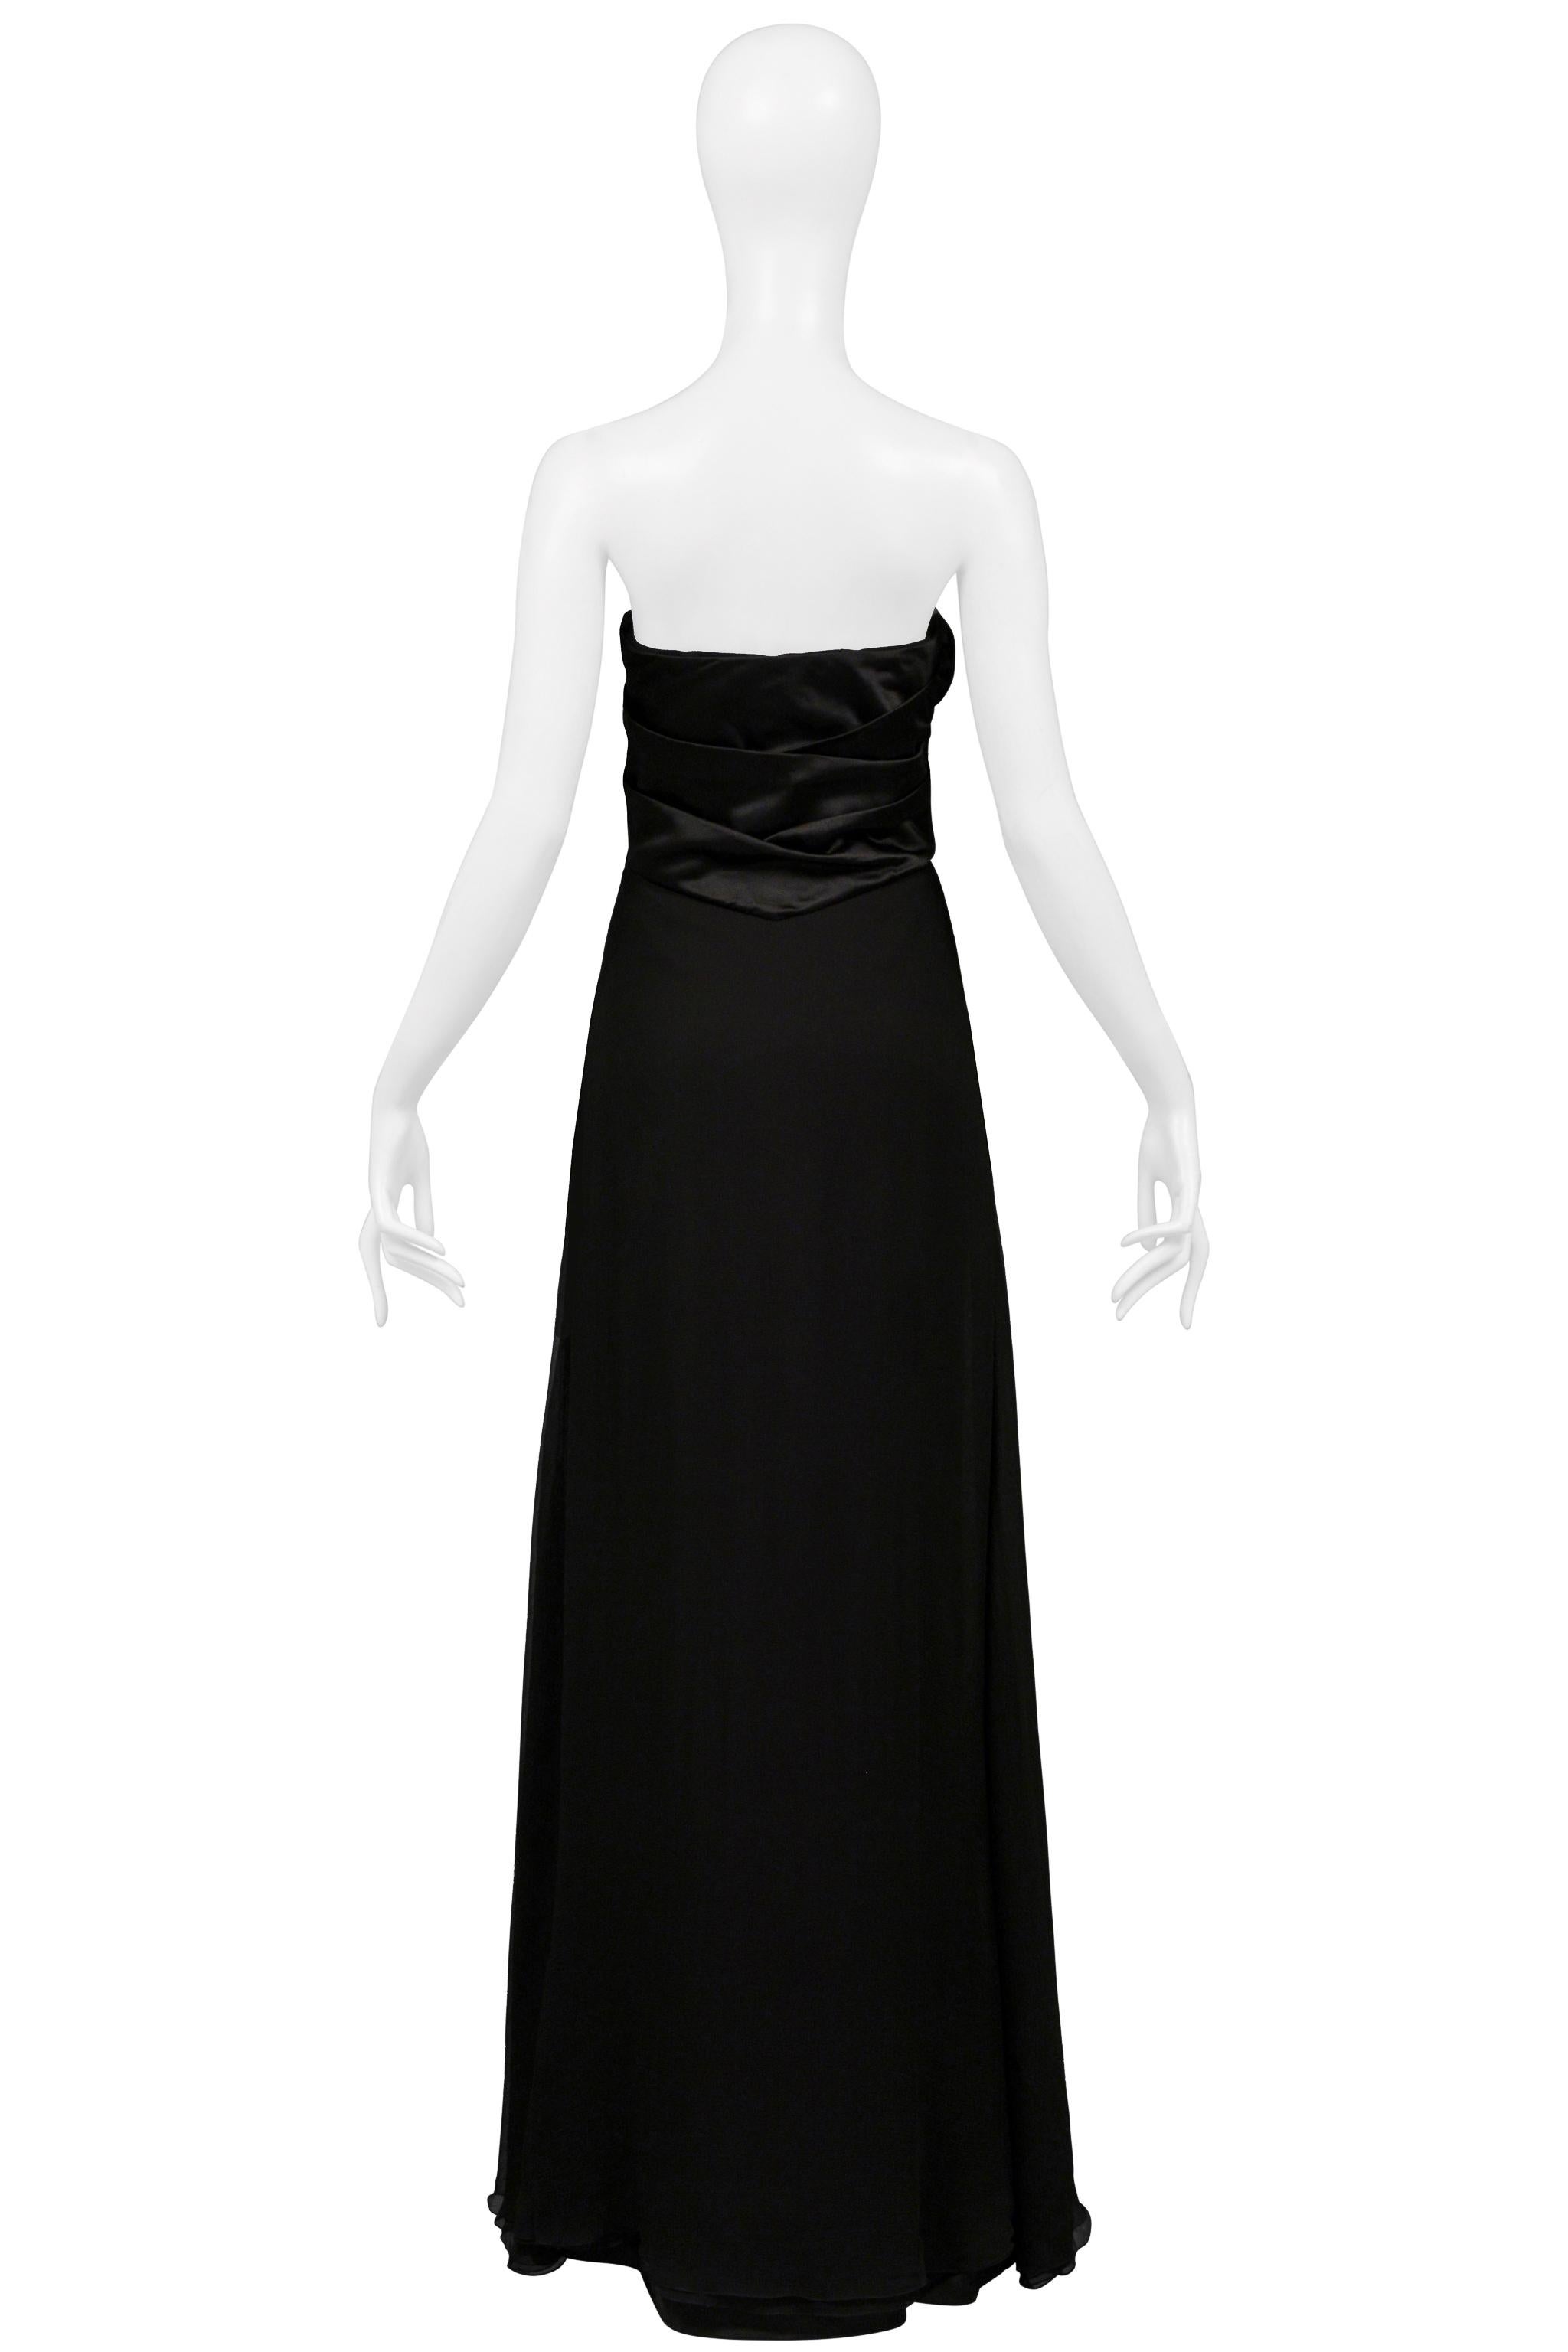 Christian Dior By John Galliano Black Gown W/ Rosettes & Rhinestones 2008 Resort For Sale 3